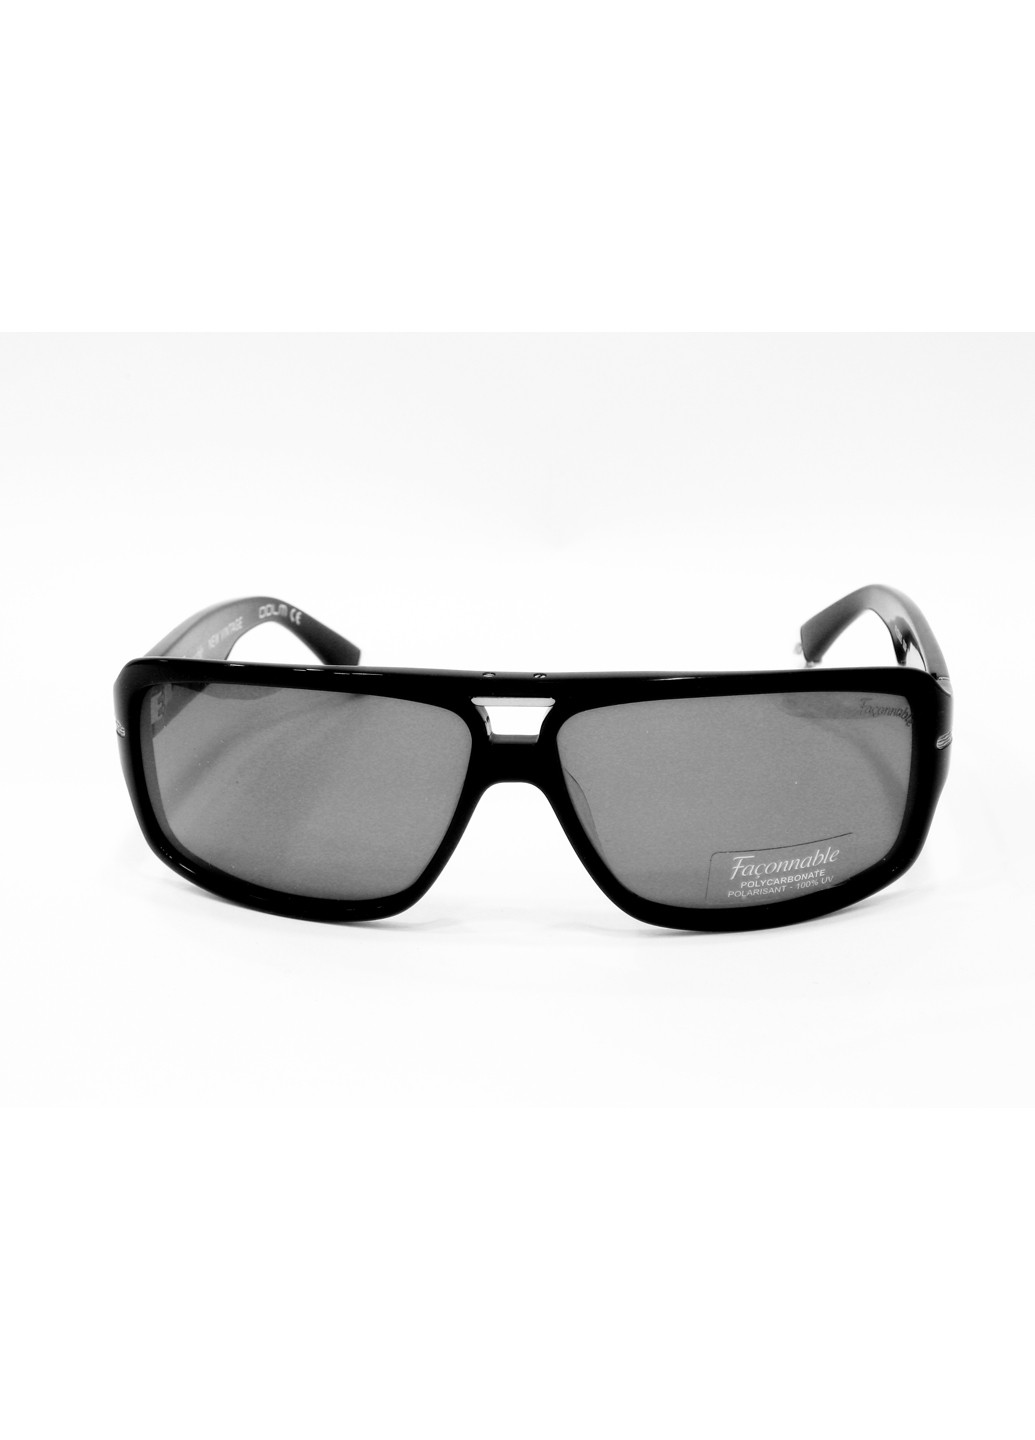 Сонцезахиснi окуляри Faconnable fv2960s 008p (260632700)